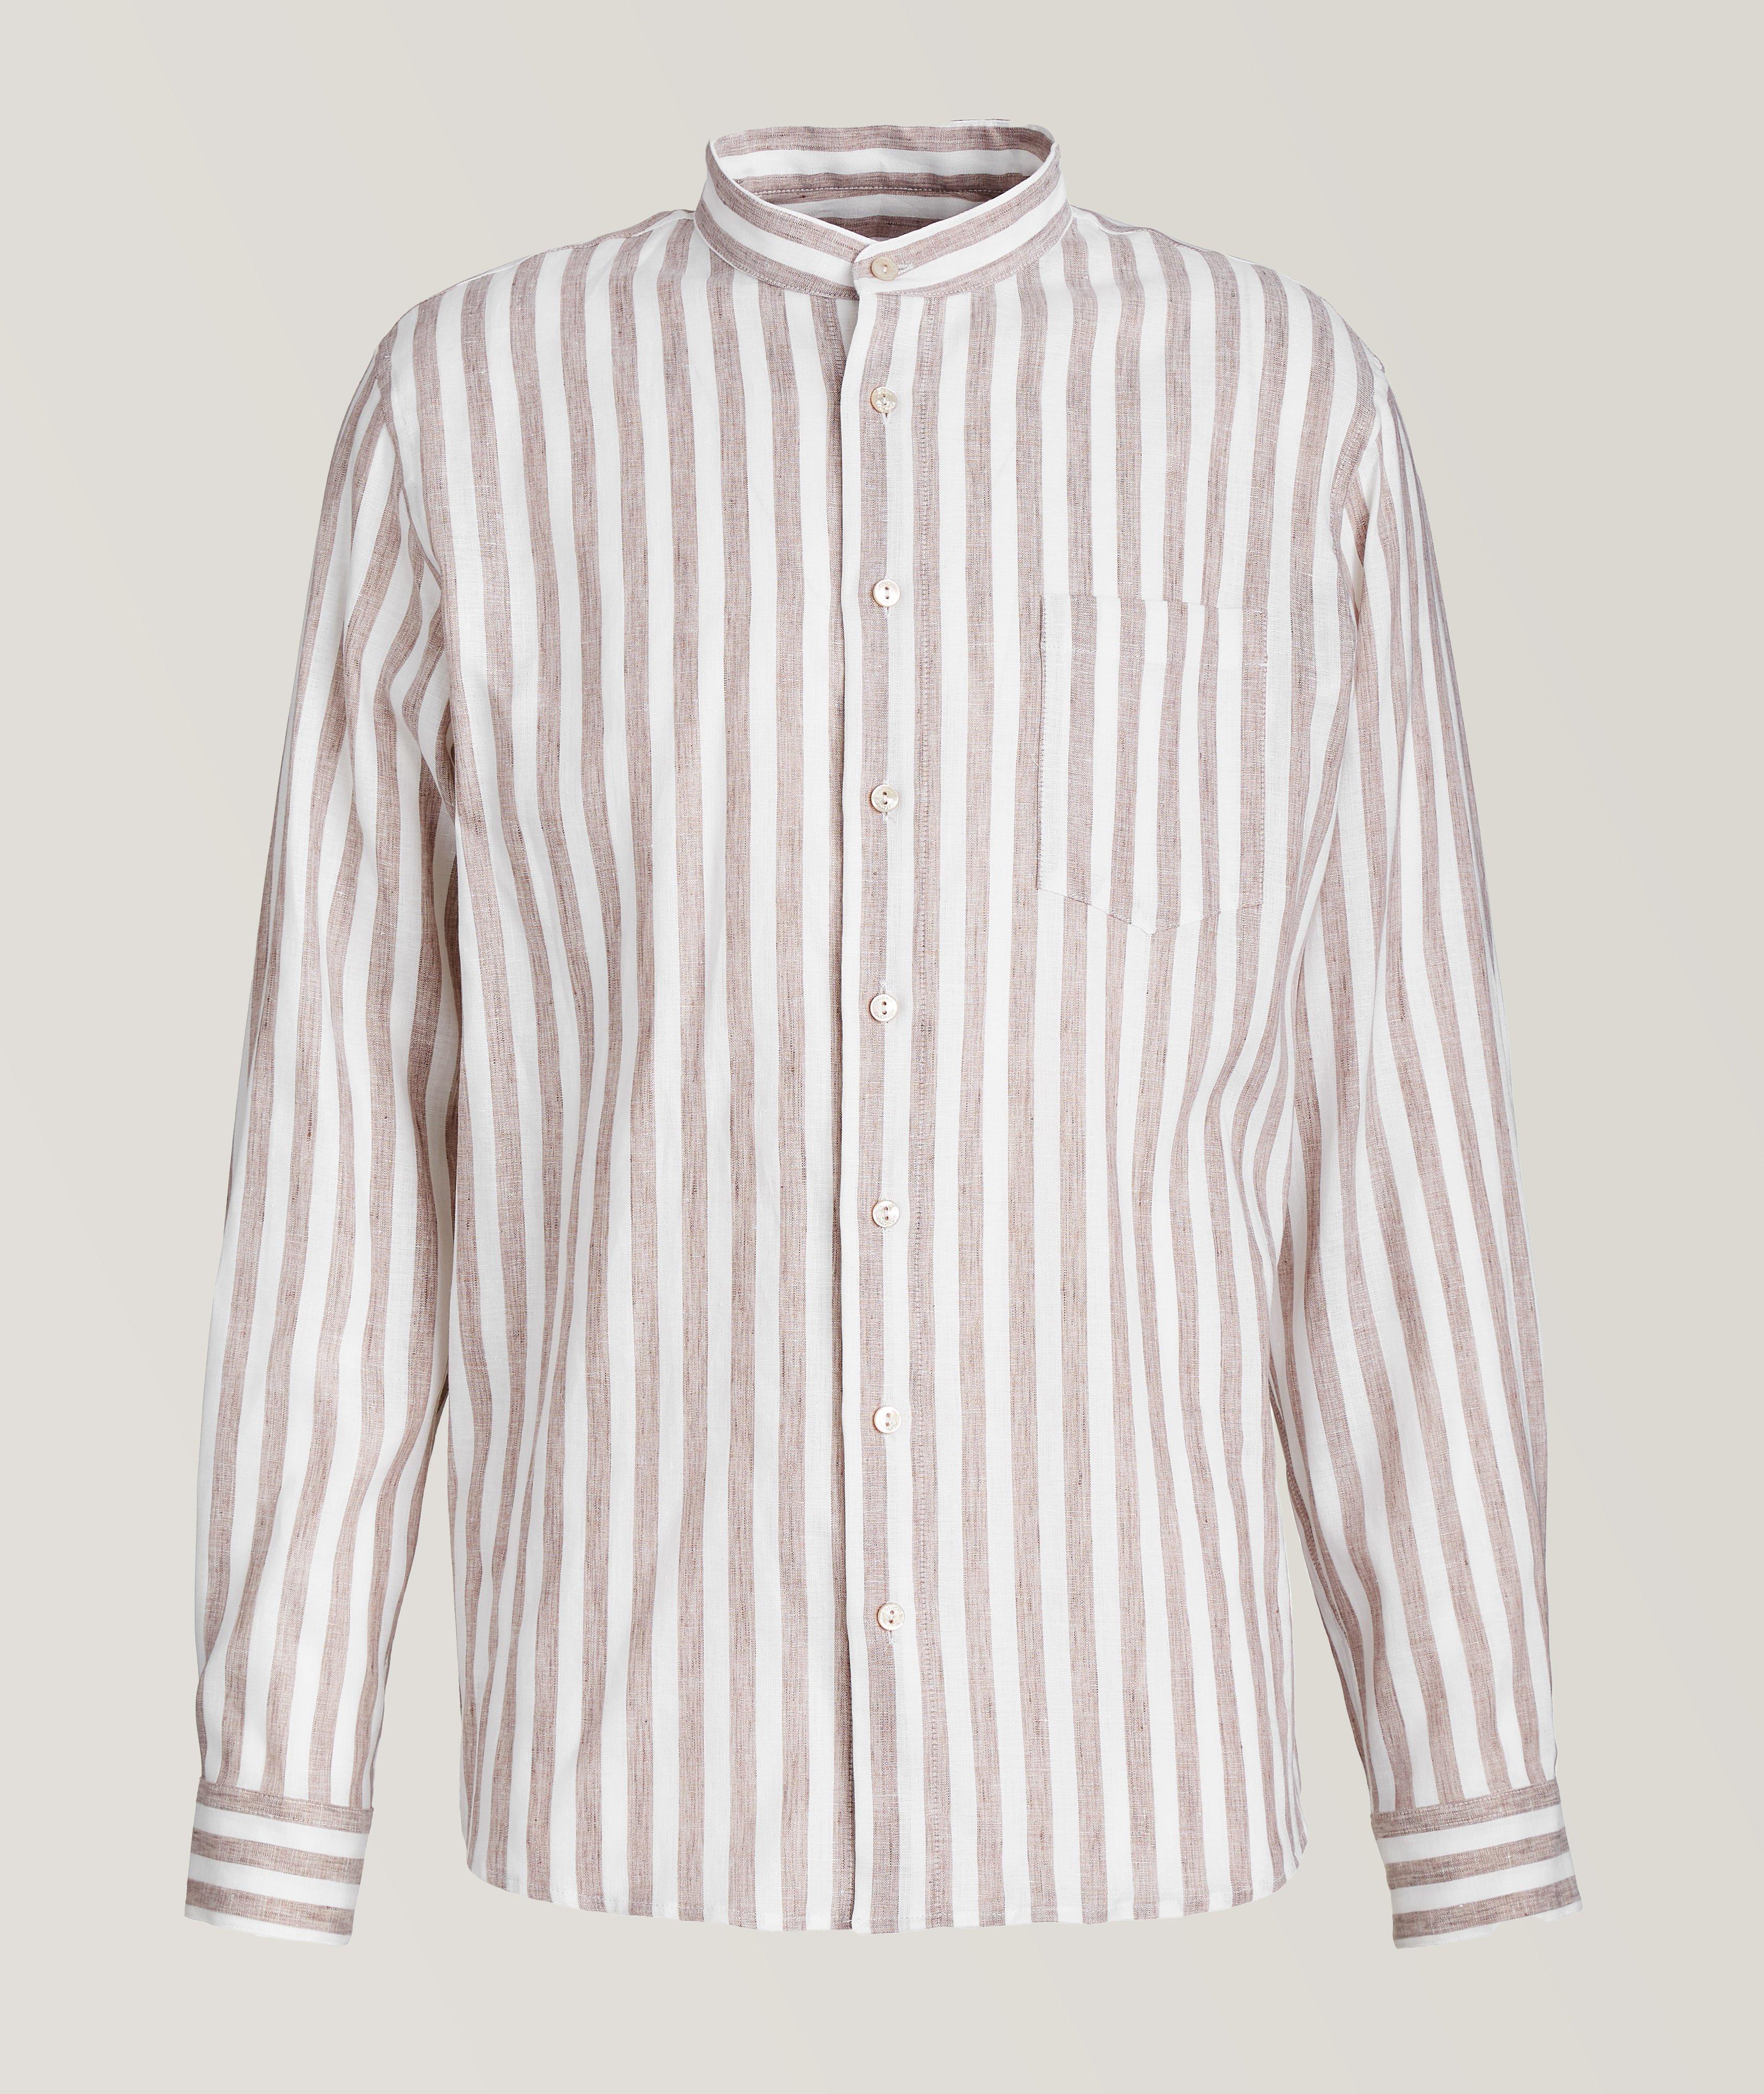 Stripe Patterned Linen Sport Shirt image 1